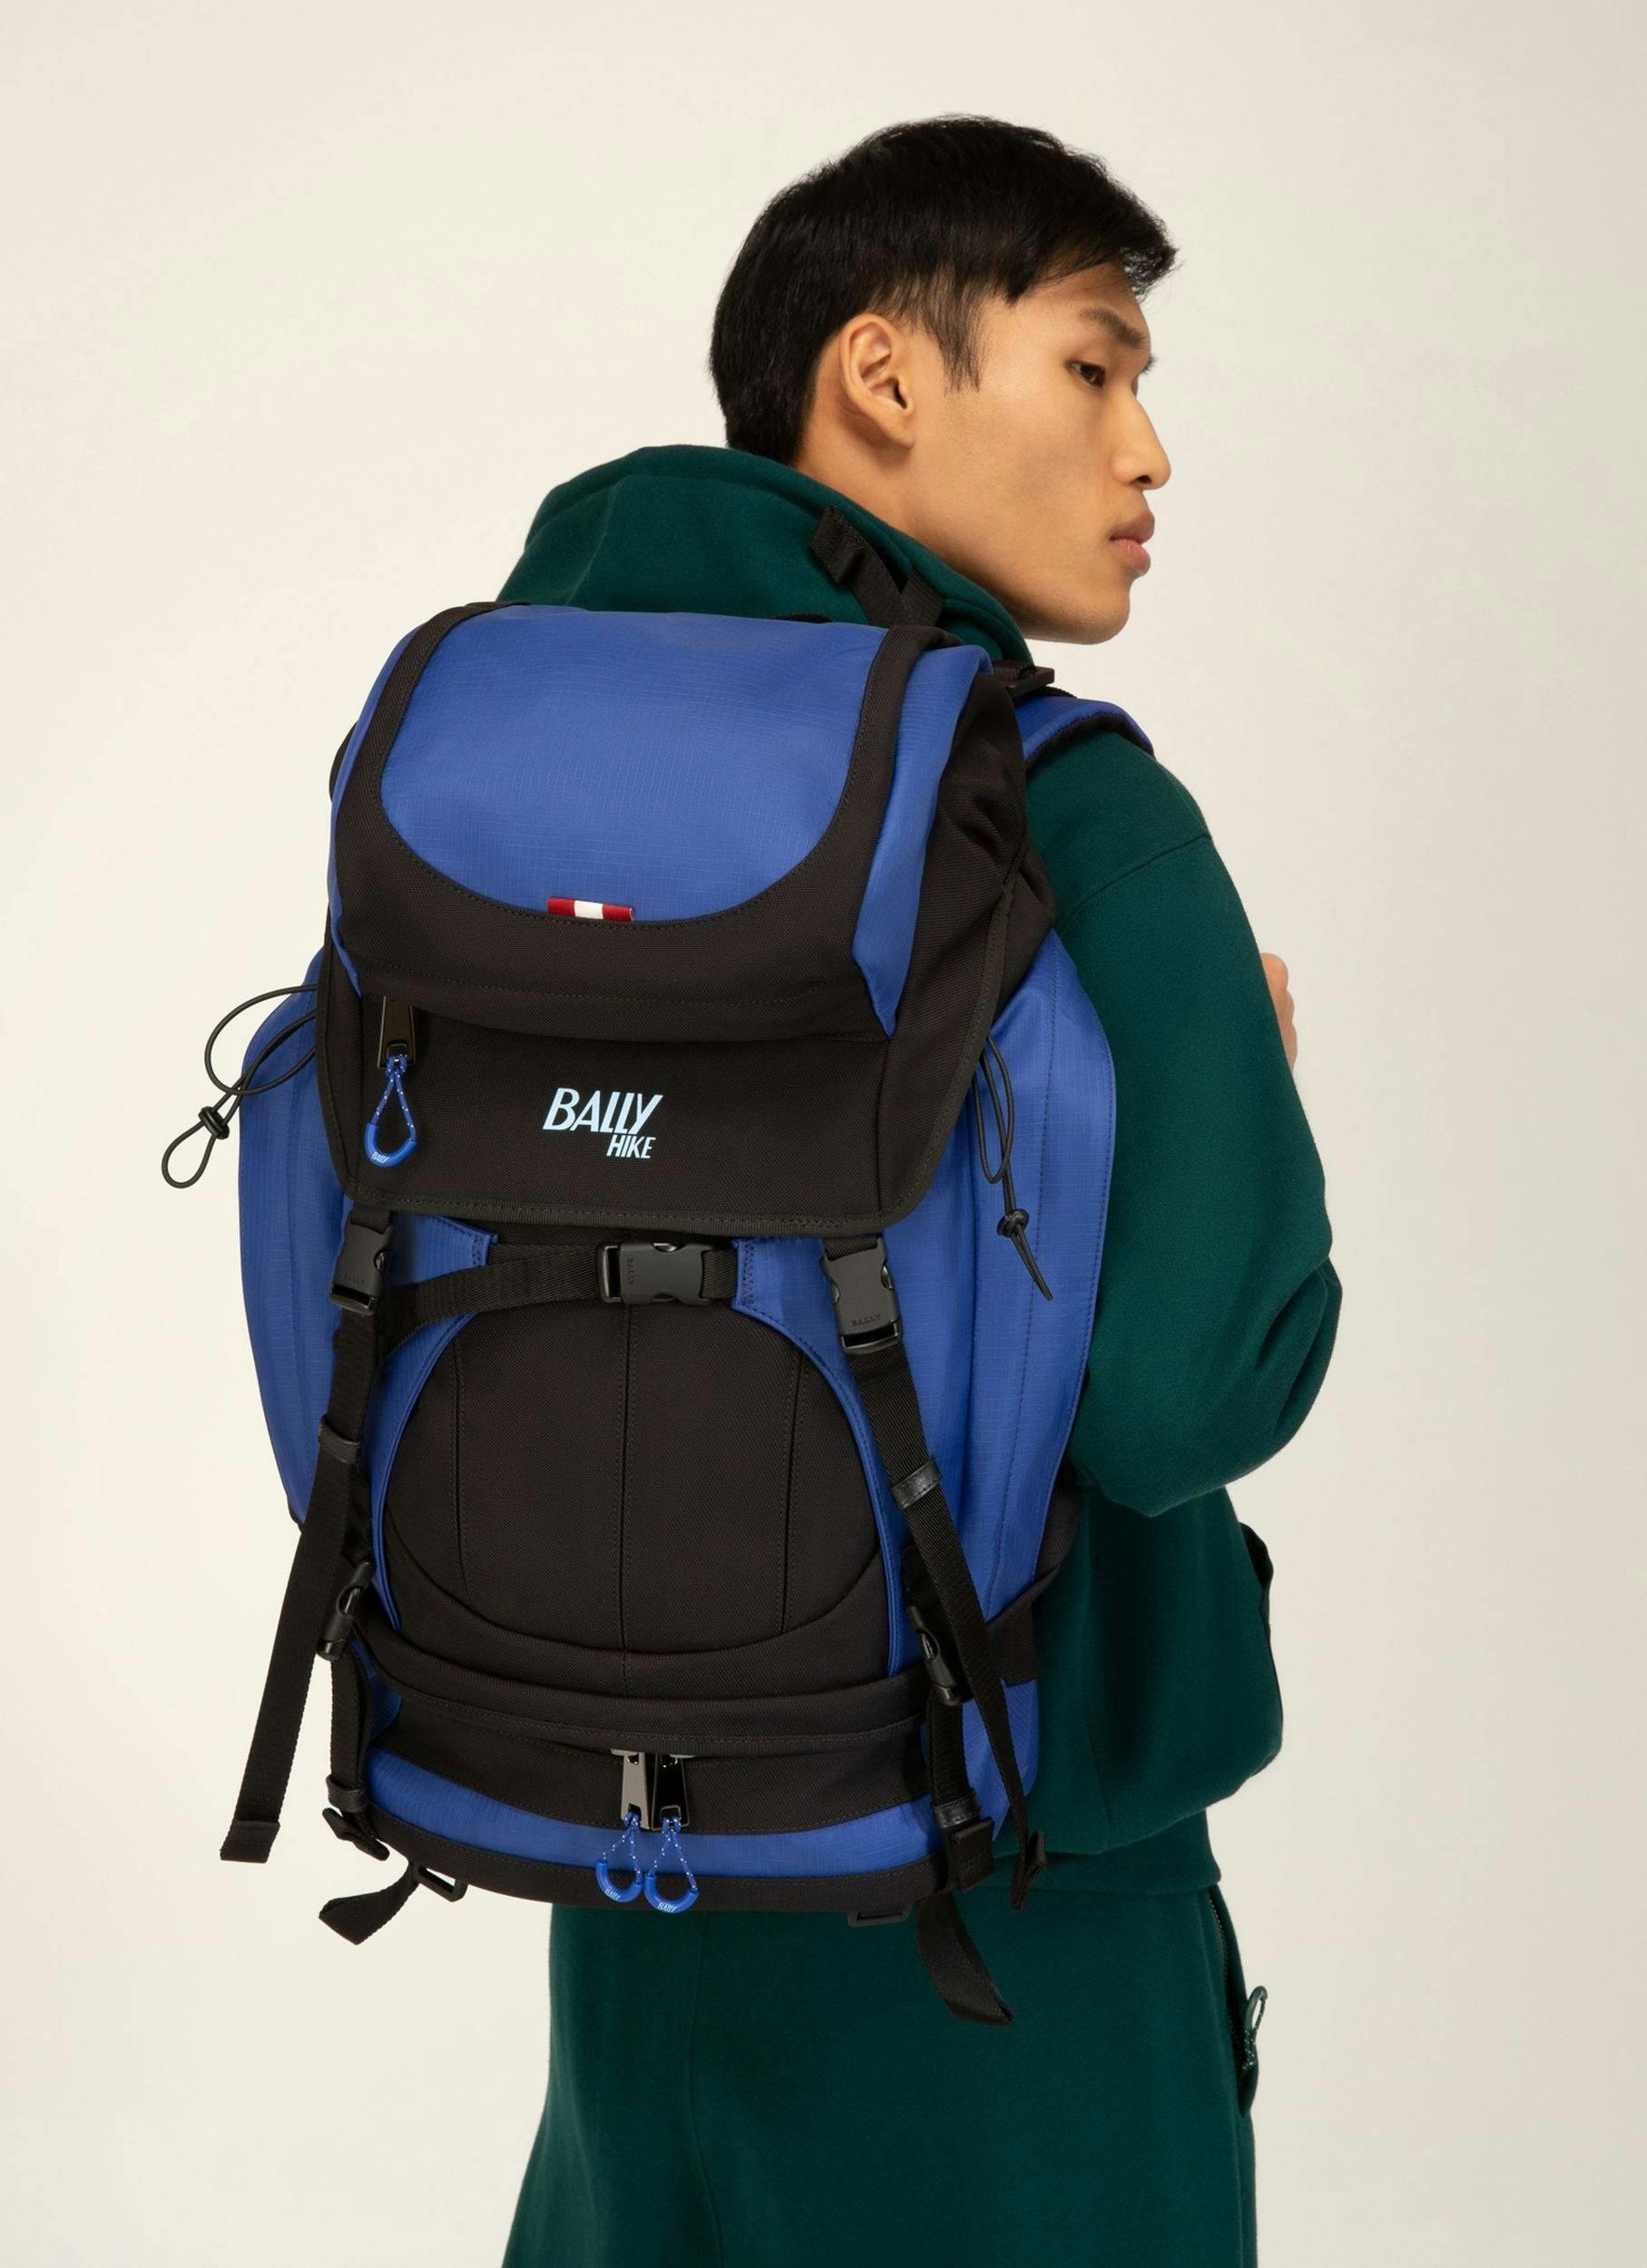 BALLY HIKE Fabric Backpack In Blue & Black - Men's - Bally - 03